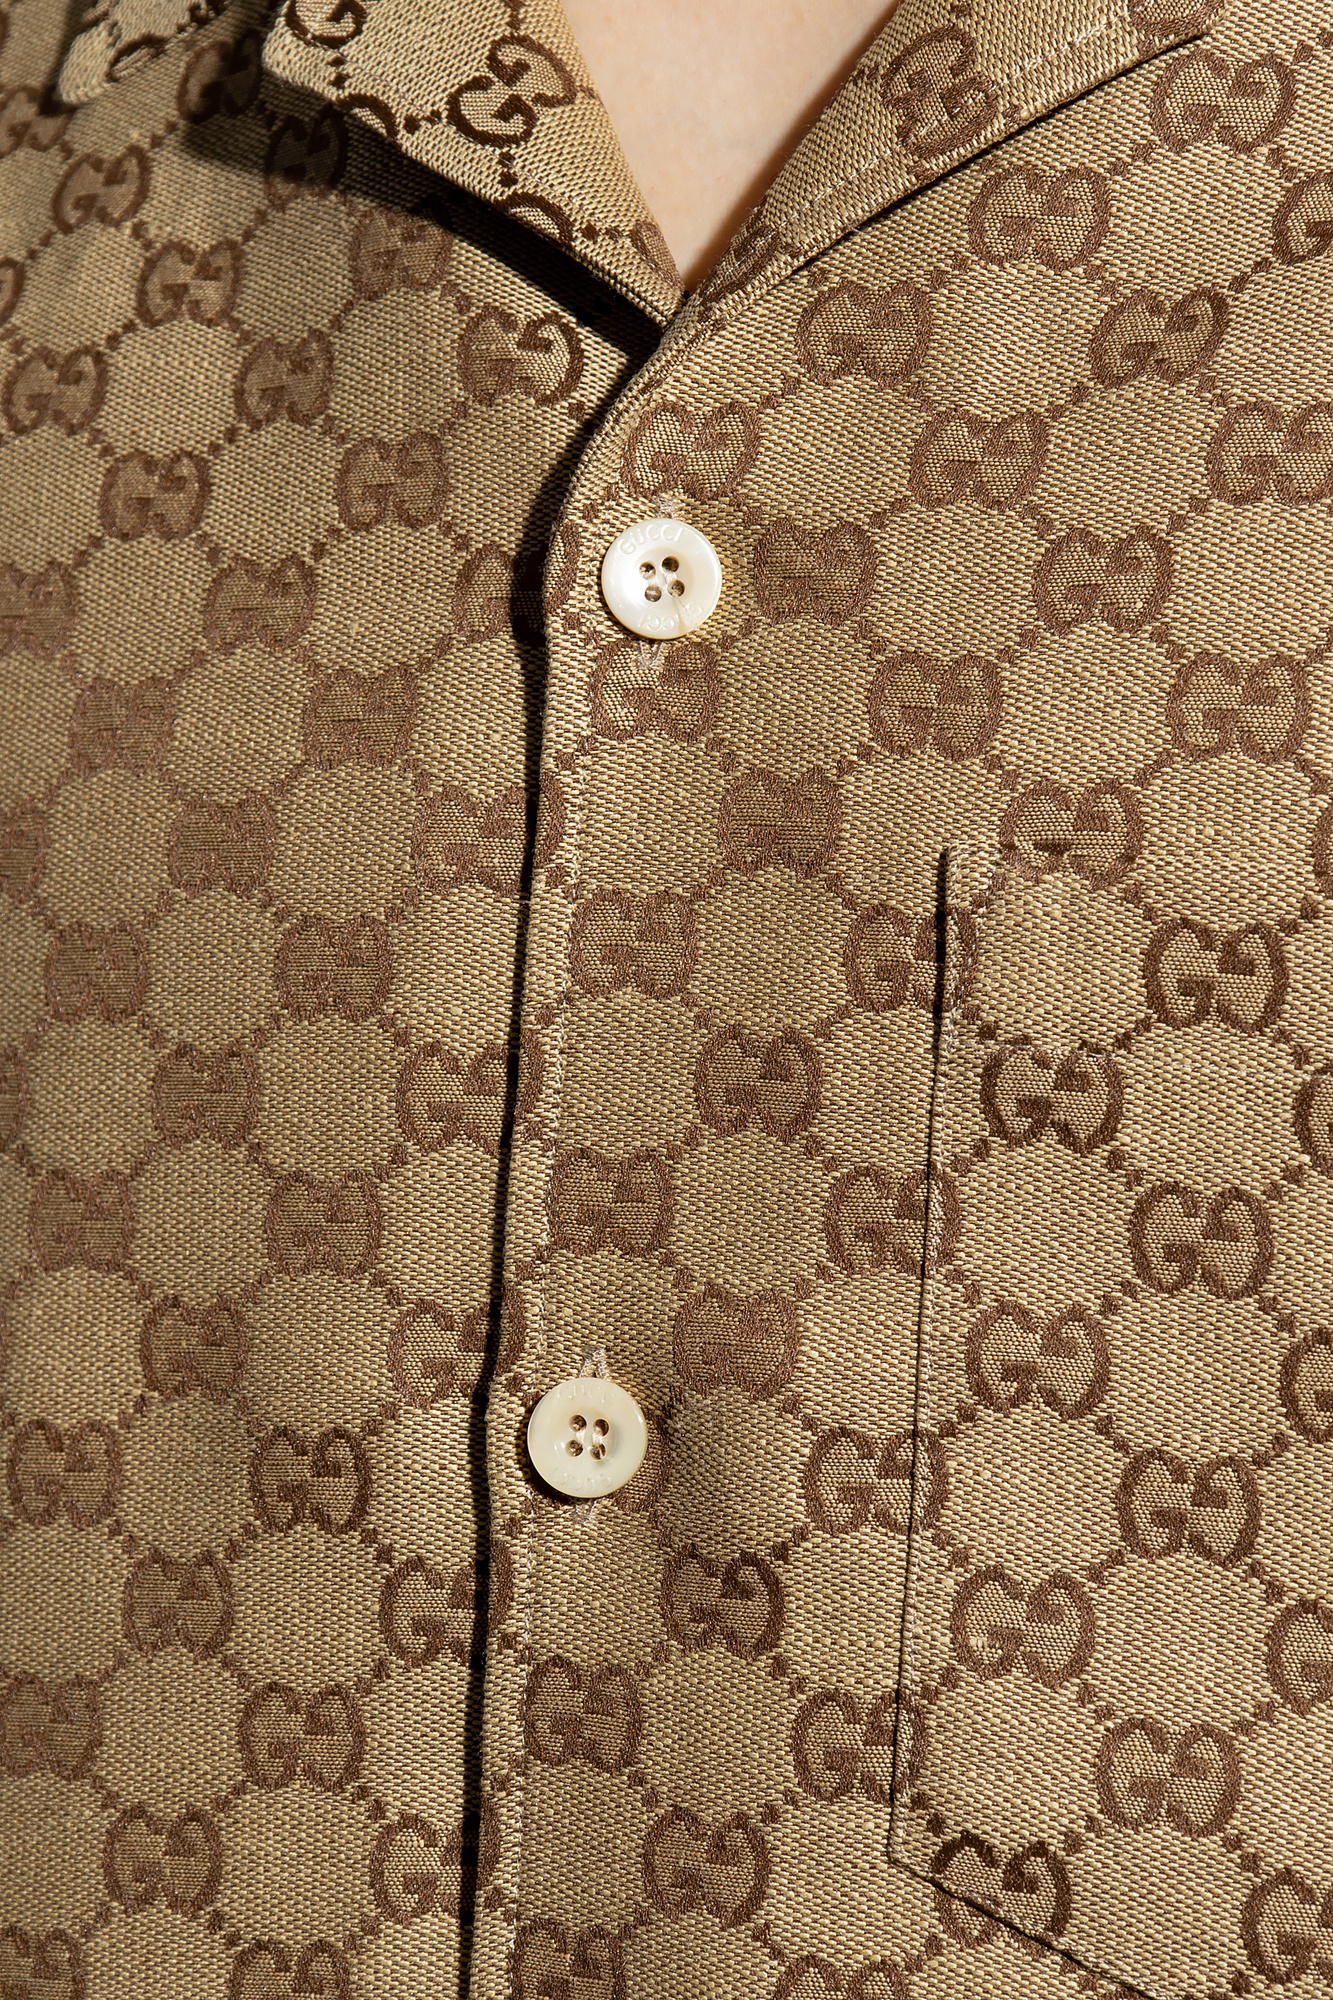 Gucci Monogrammed shirt, Men's Clothing